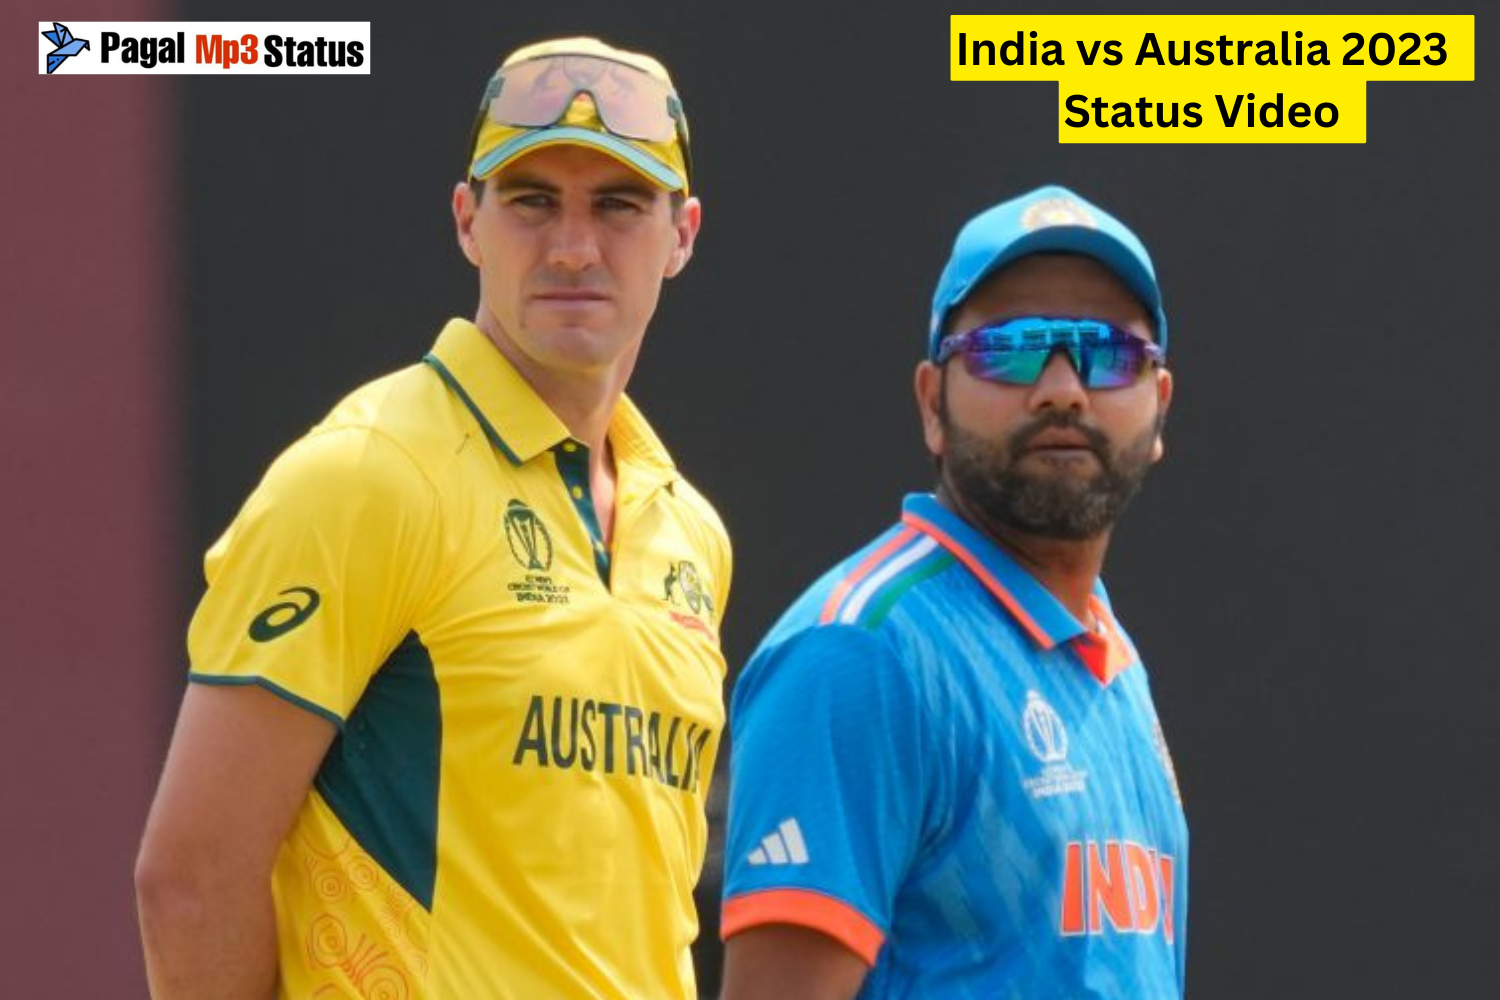 India vs Australia Status Video